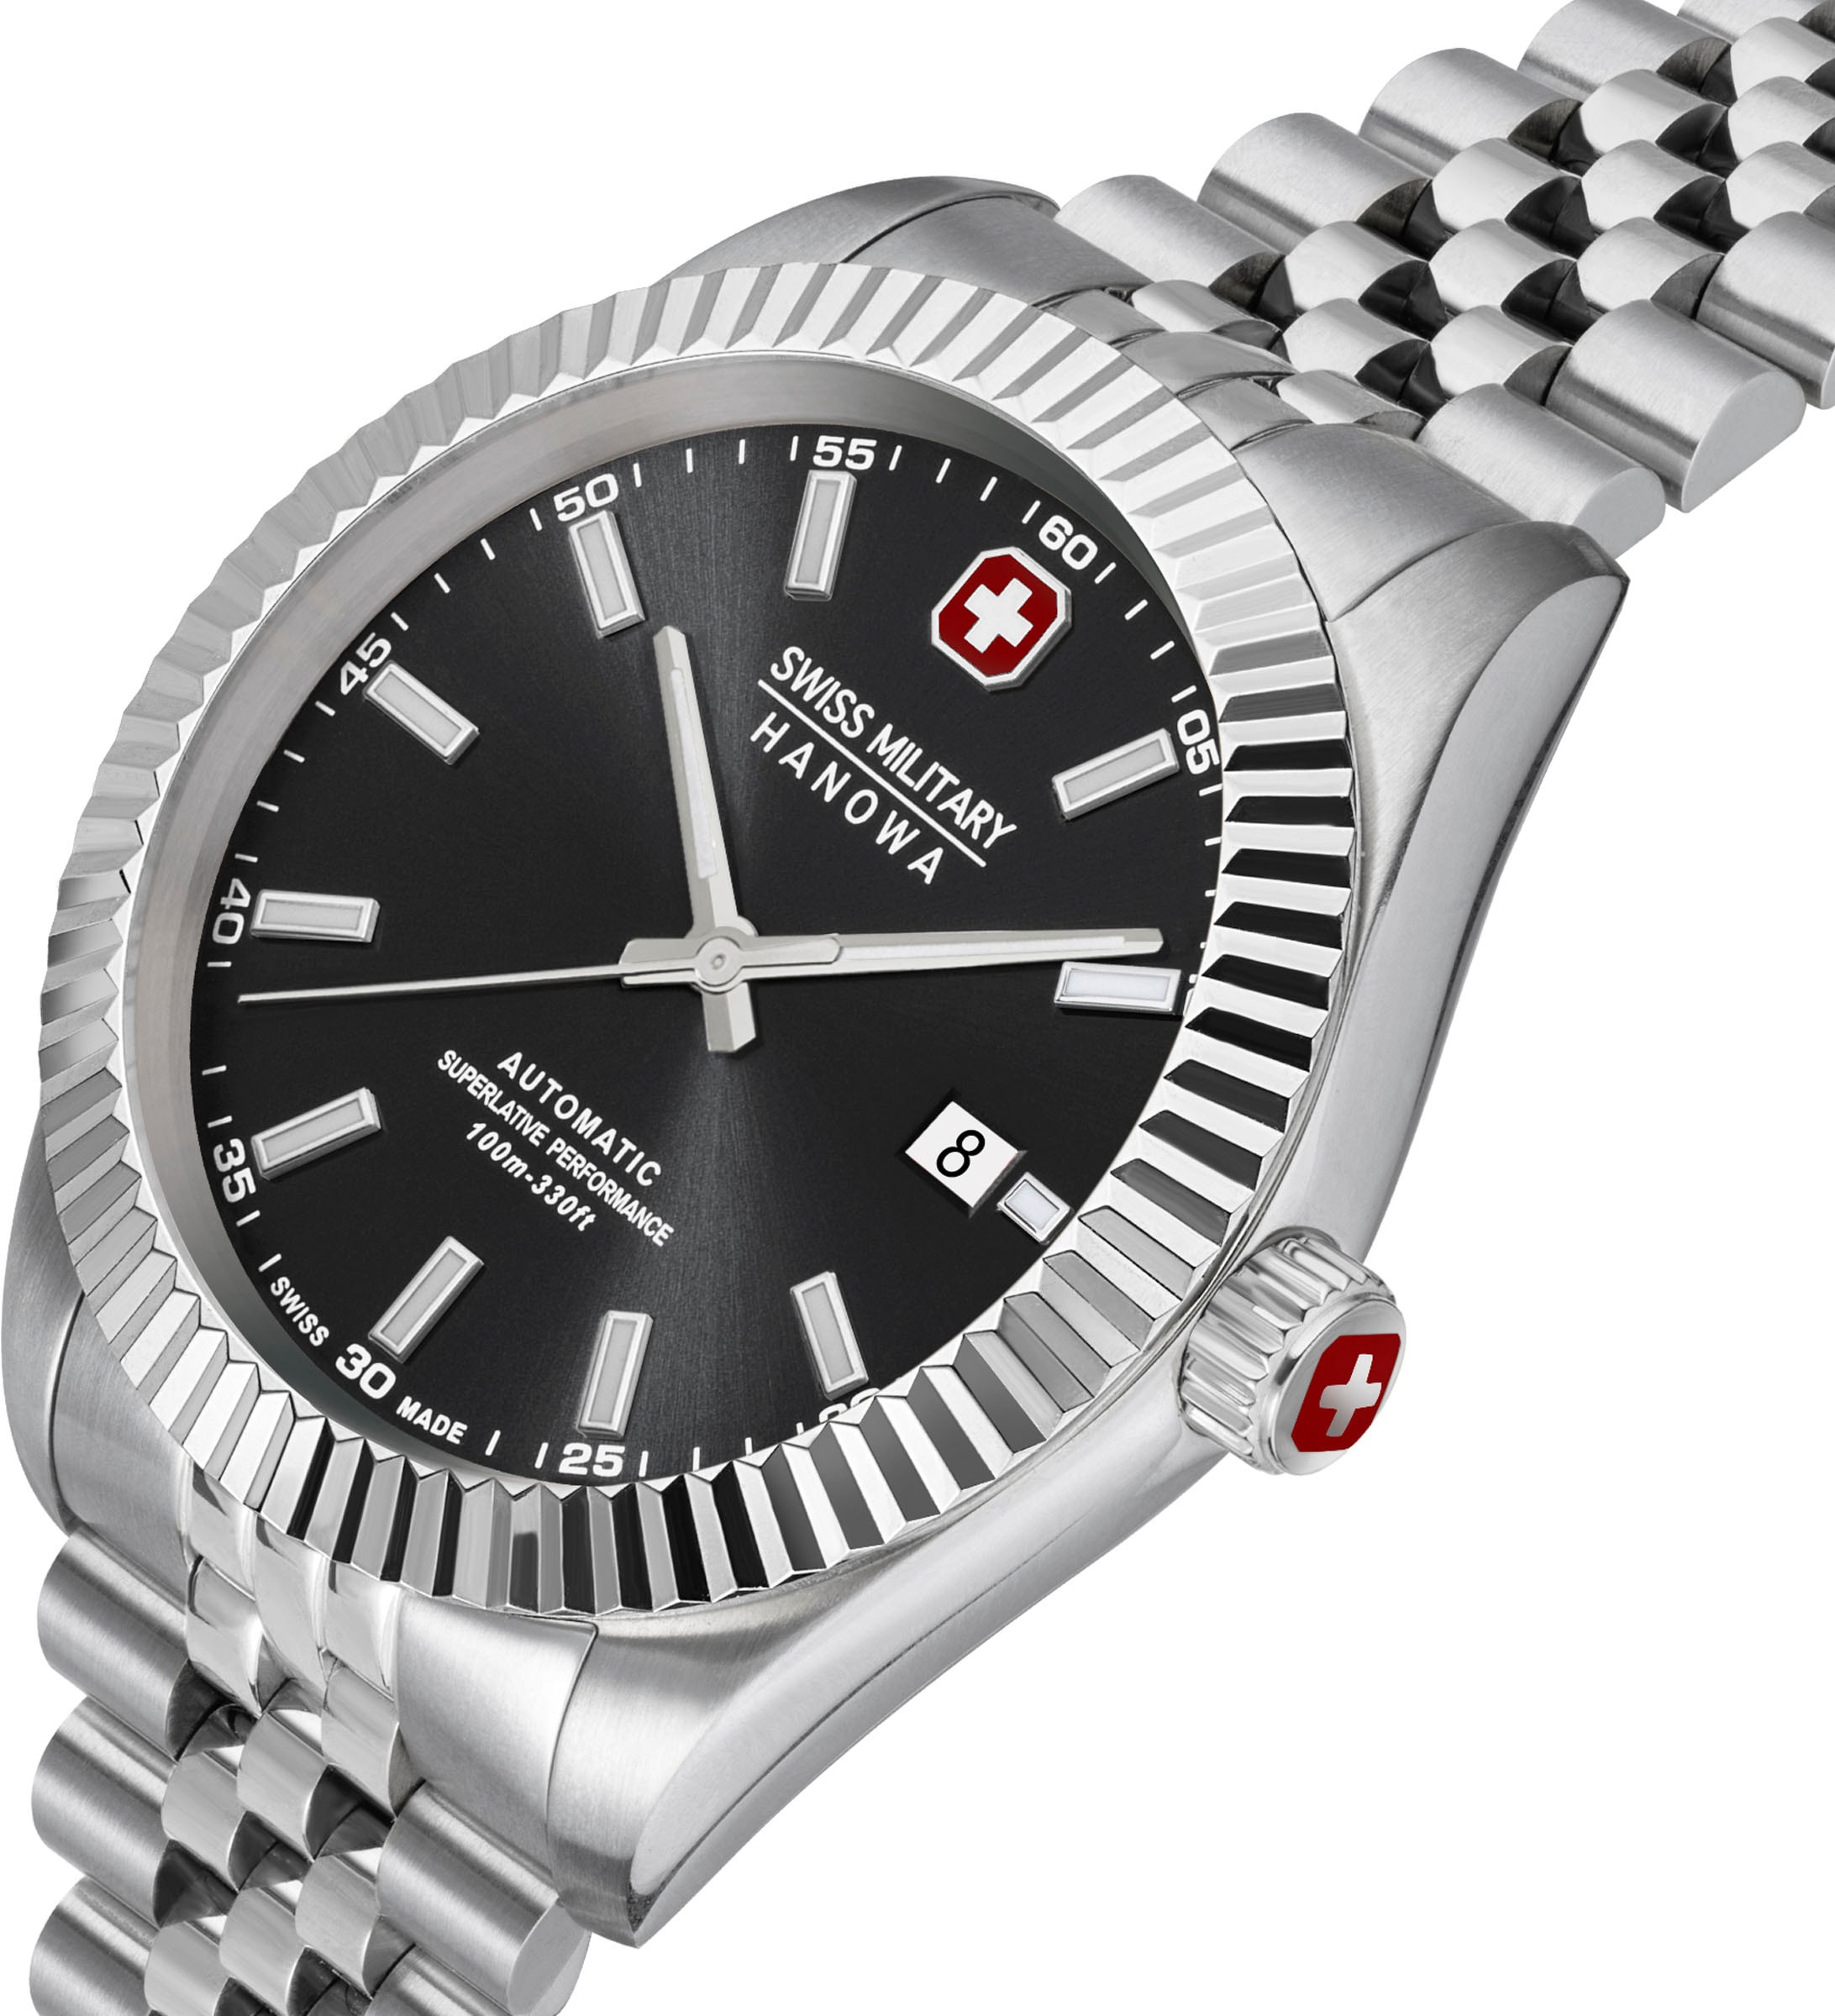 Swiss Military Hanowa Schweizer Uhr »AUTOMATIC DILIGENTER, SMWGL0002101«  online kaufen | I'm walking